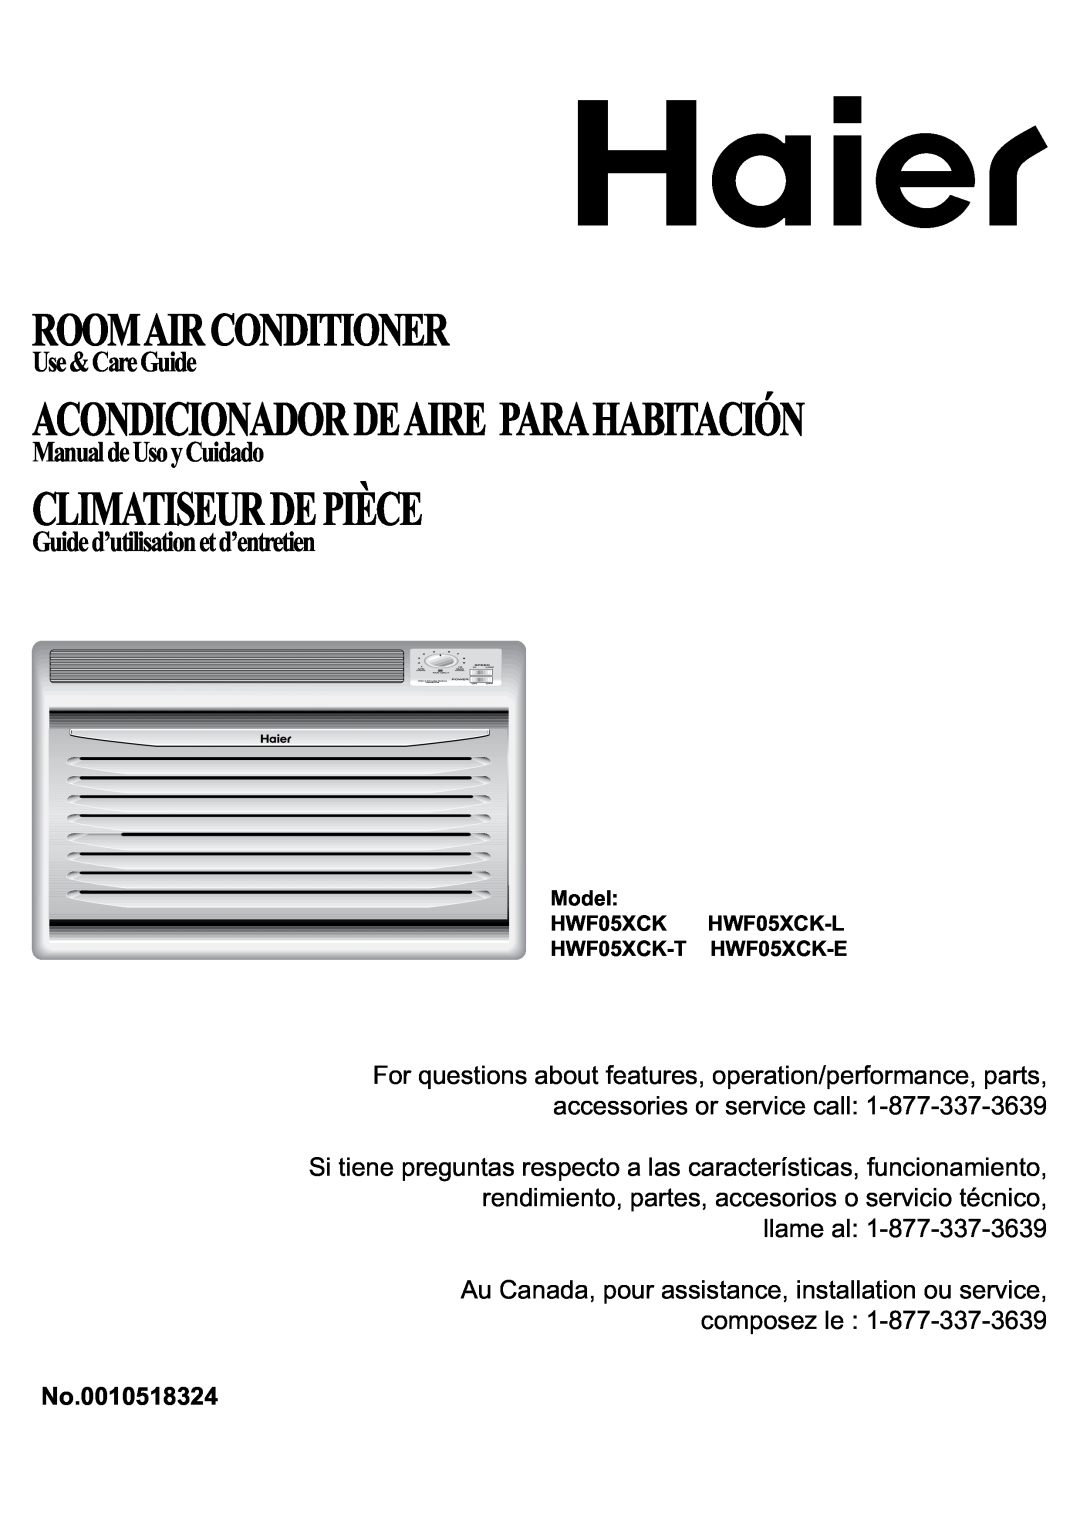 Haier HWF05XCK-T manual Climatiseurdepièce, Roomairconditioner, Acondicionadordeaire Parahabitación, Use&CareGuide 